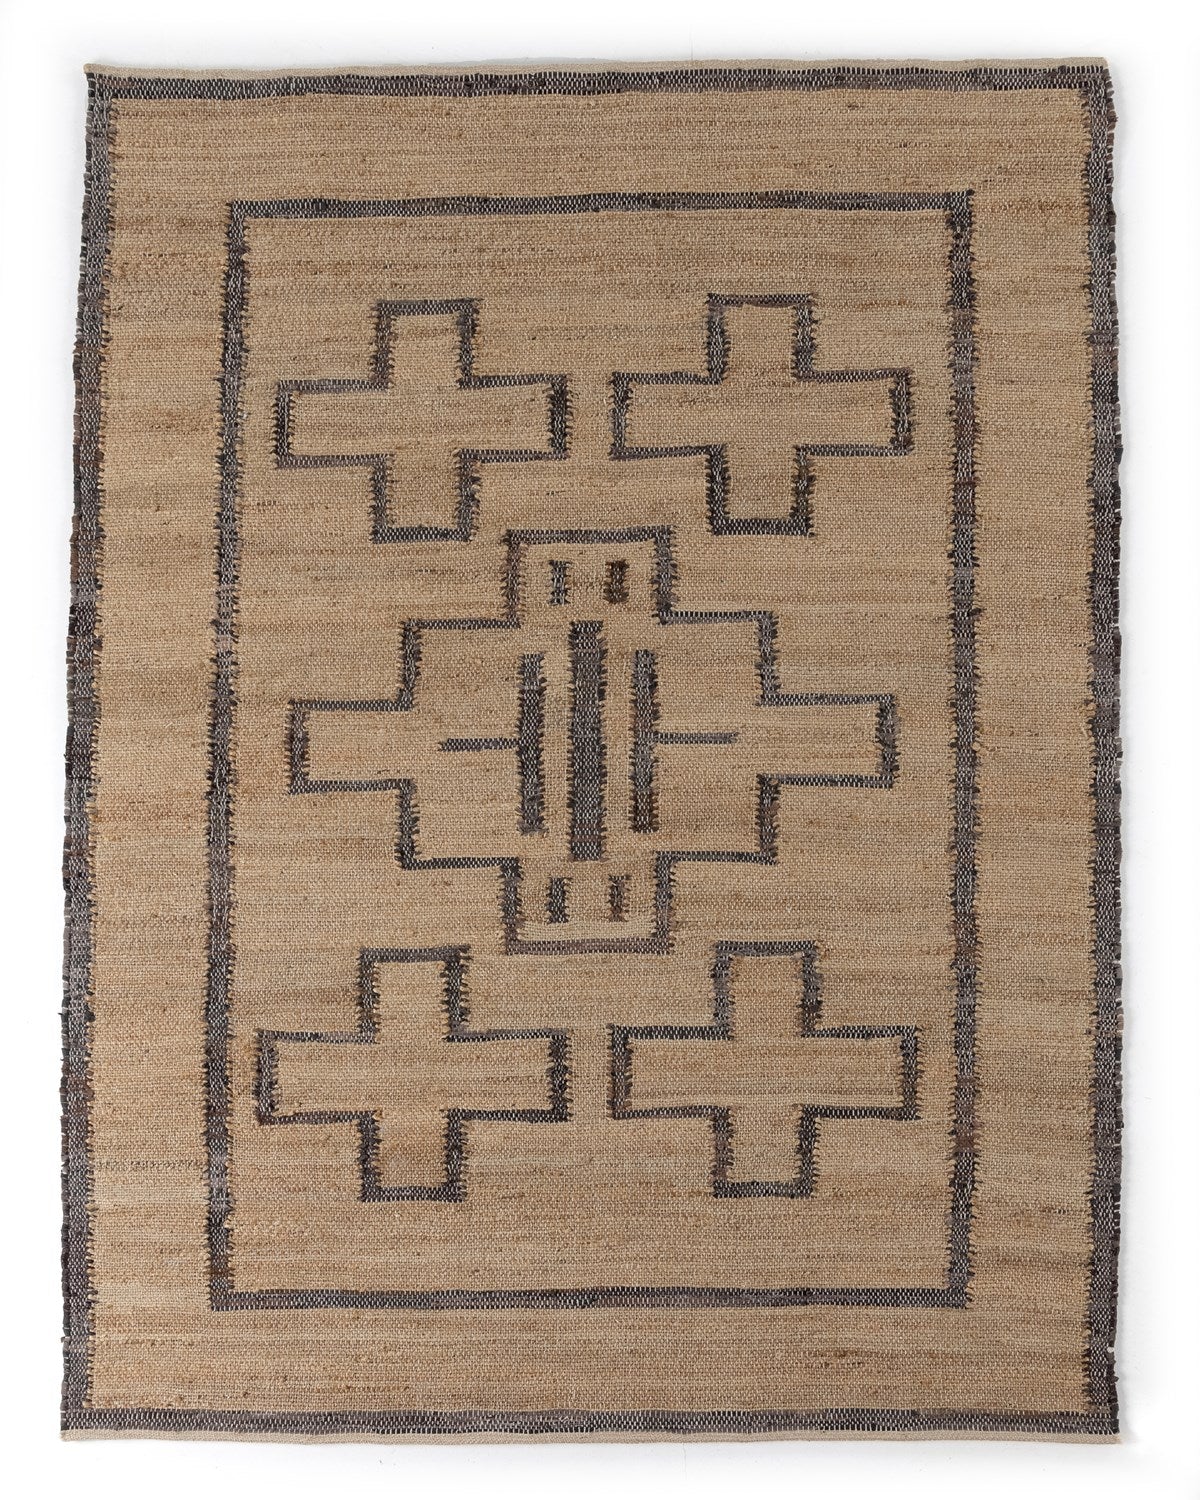 modern area rugs